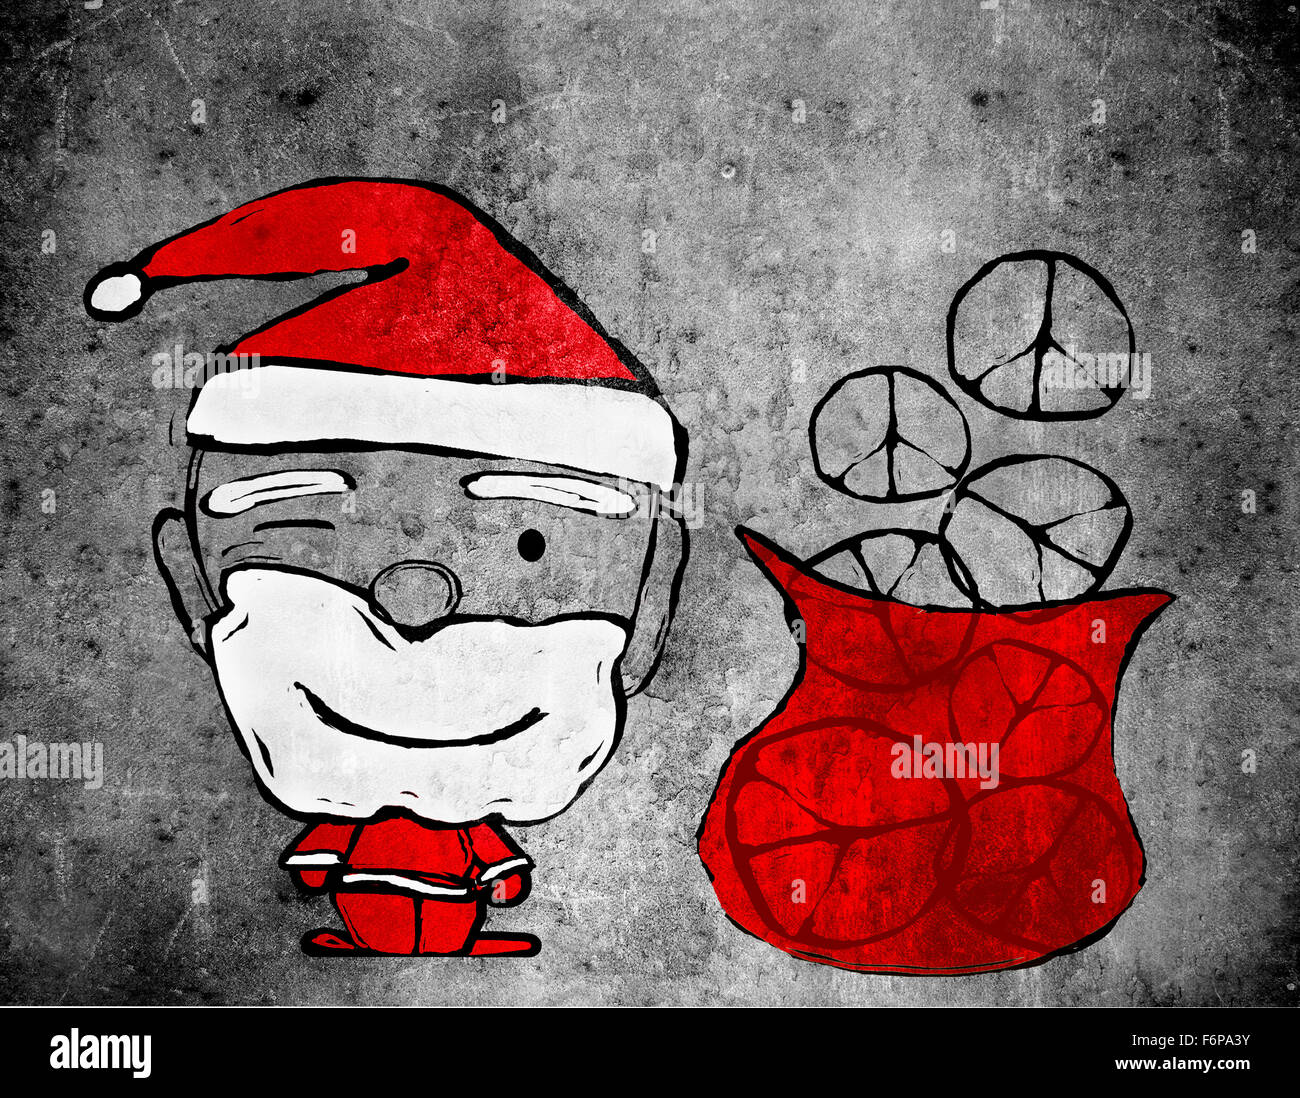 Santa Claus and peace symbols digital illustration Stock Photo